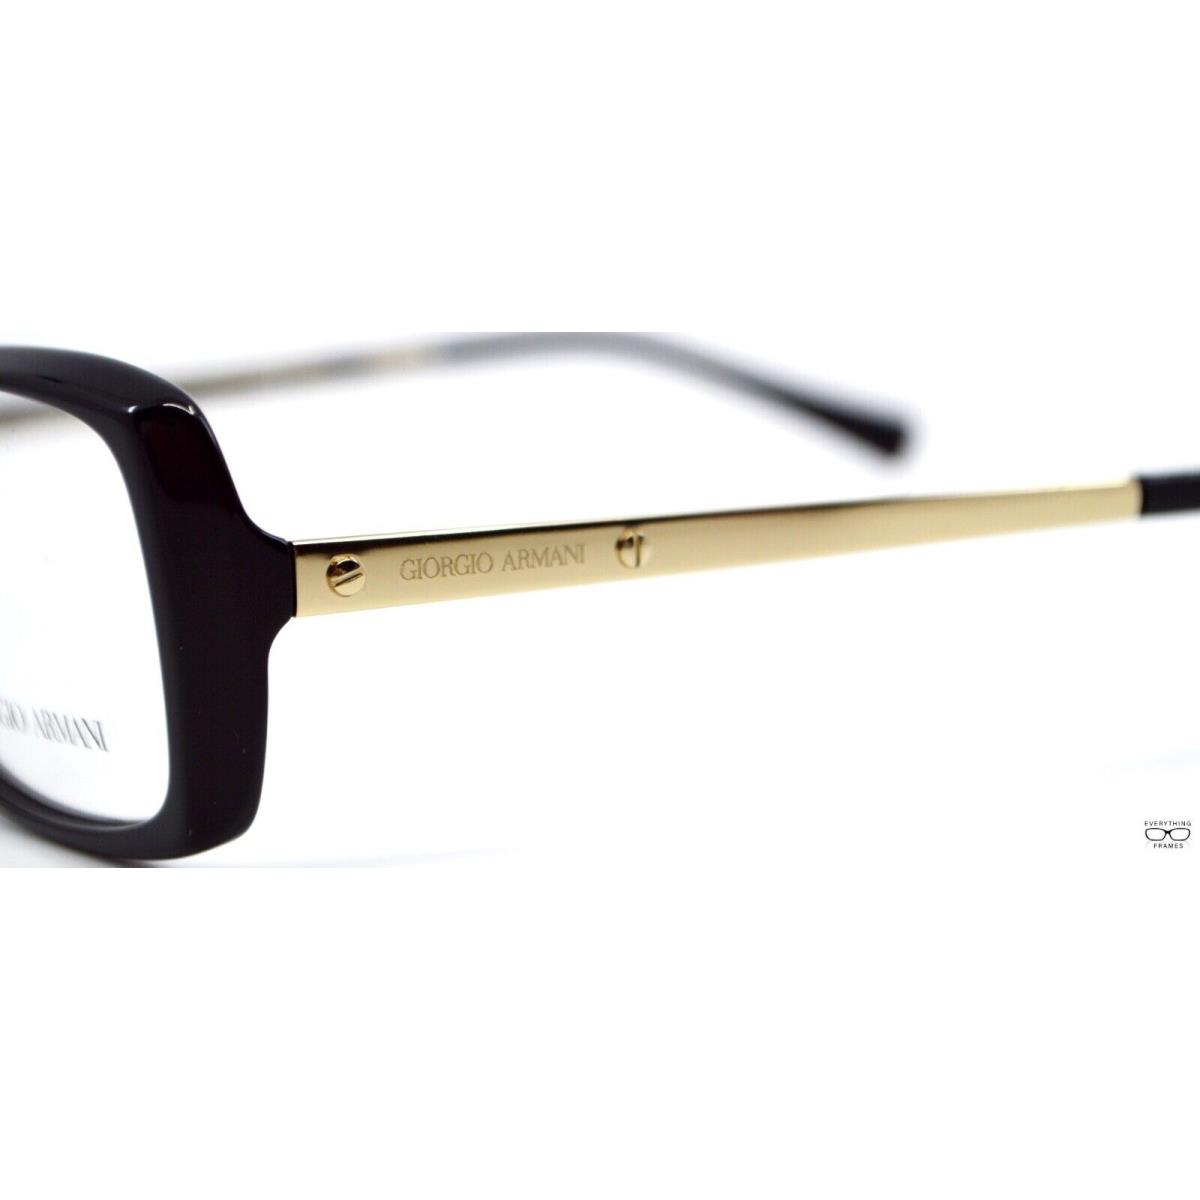 Giorgio Armani eyeglasses  - BLACK Frame 4